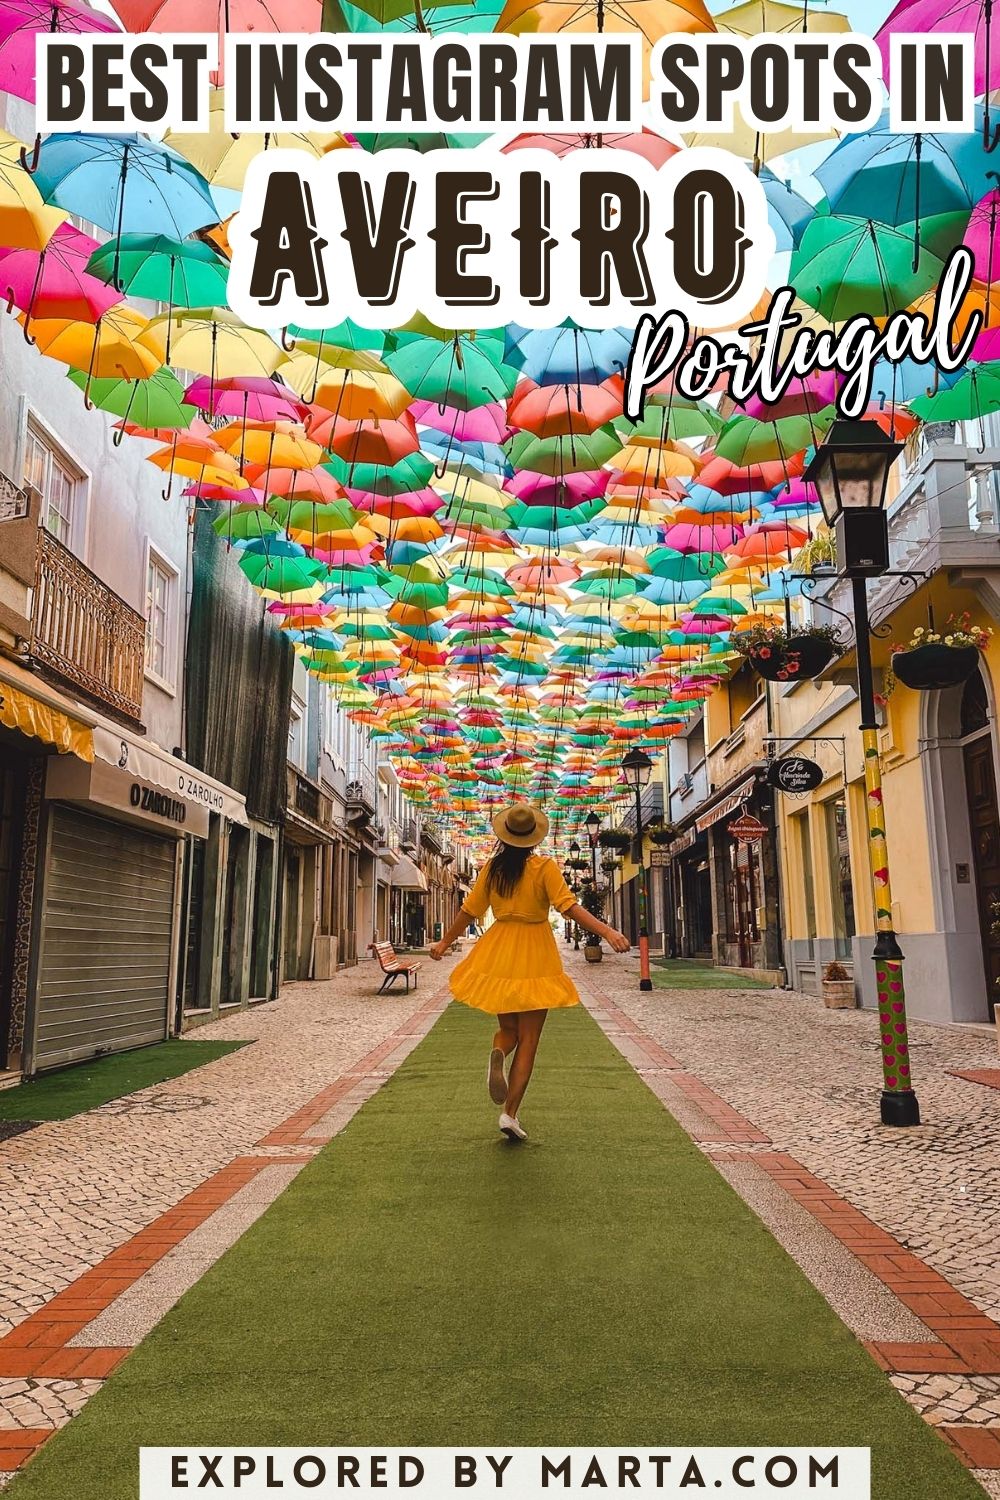 Best Instagram spots in Aveiro, Portugal